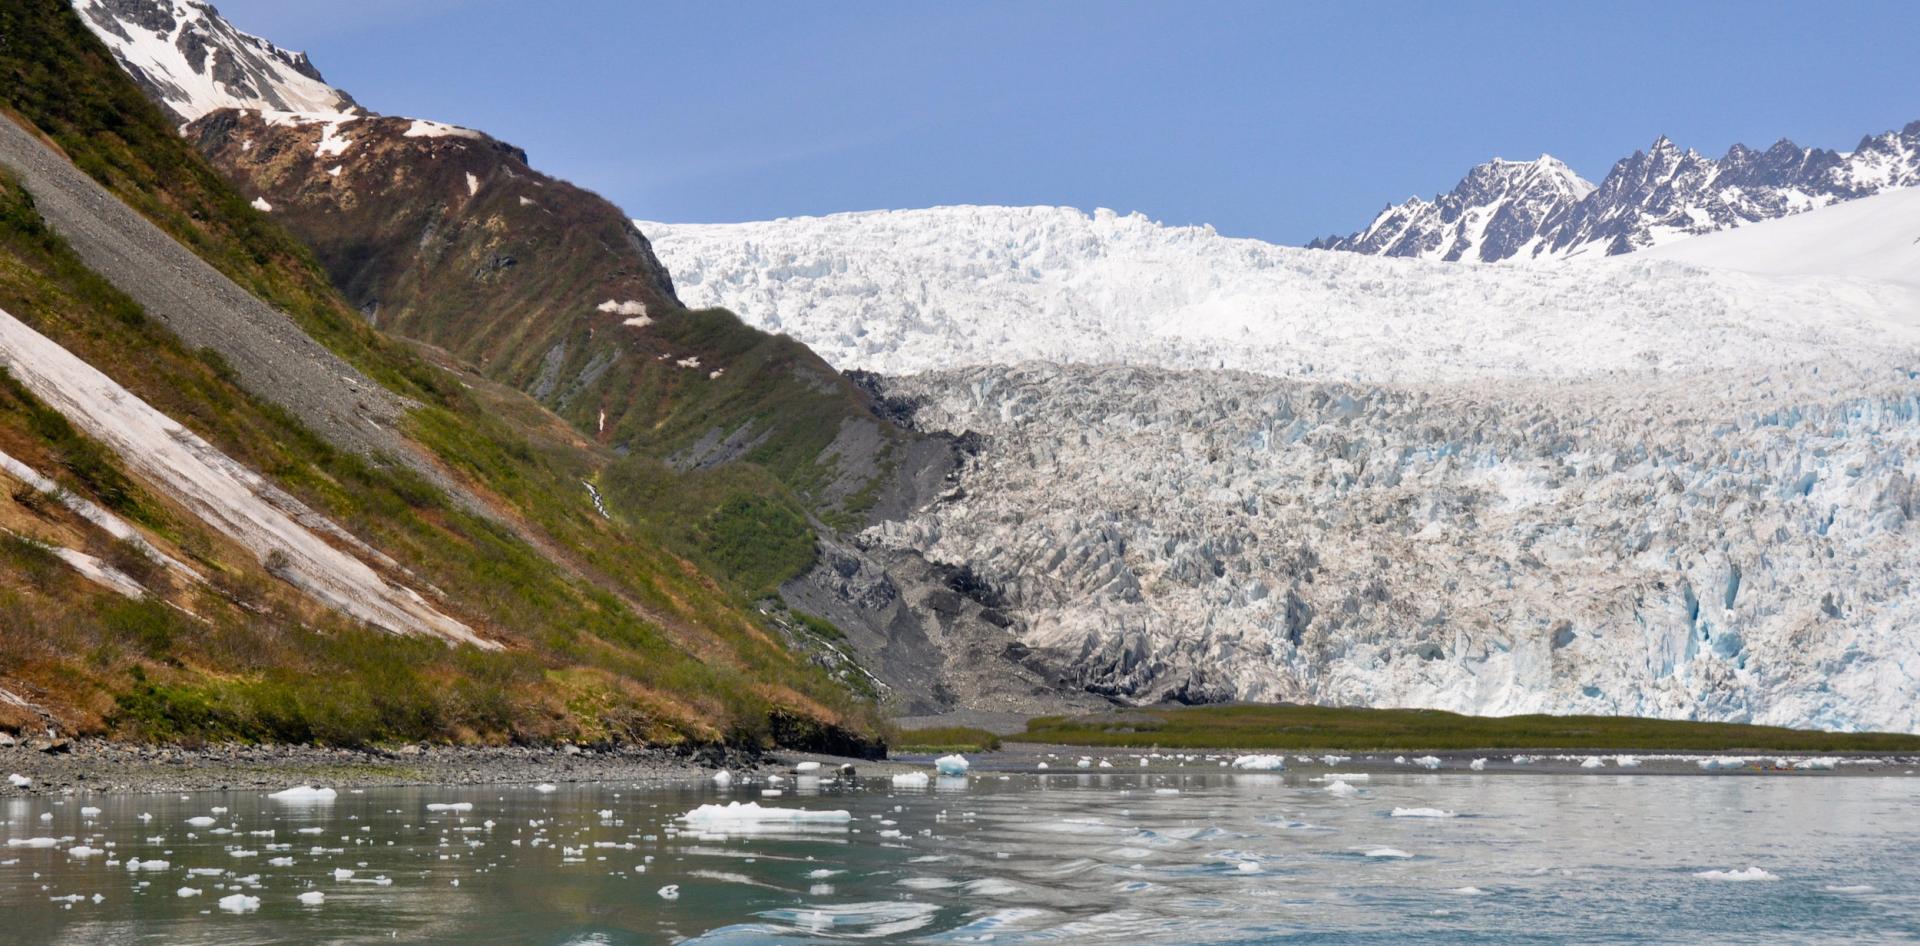 Aialik glacier in Kenai Fjords National Park, Alaska